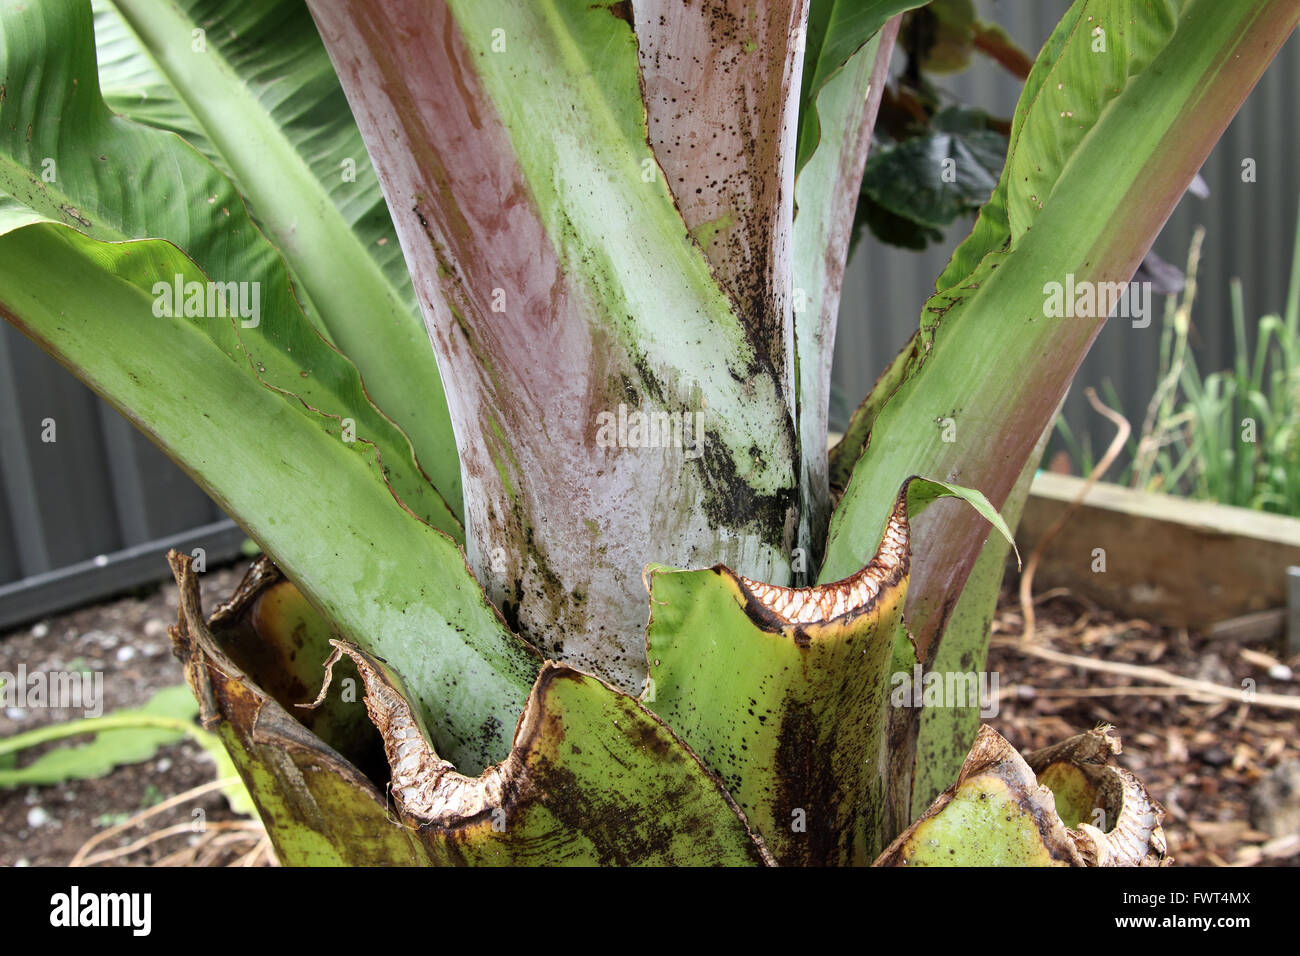 Ensete ventricosum abisinio, tronco de plátano Foto de stock